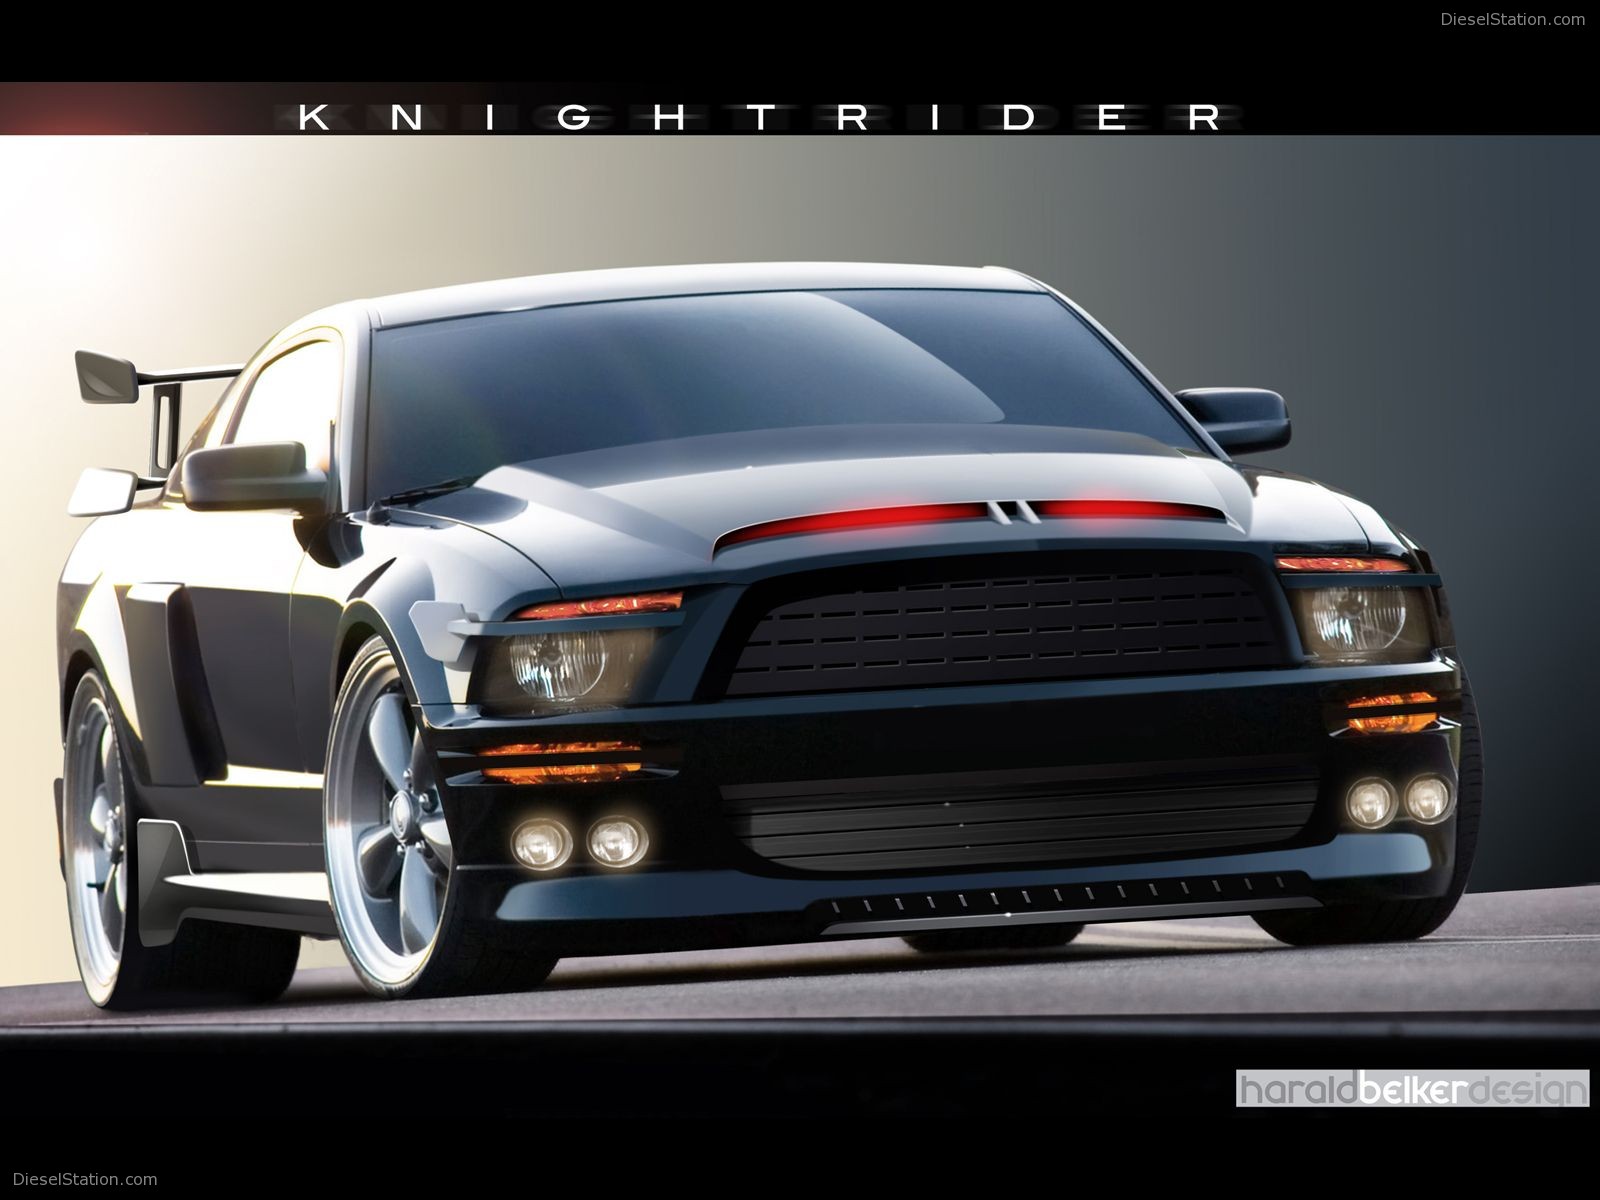 Home Shelby Knight Rider Mustang Gt500kr